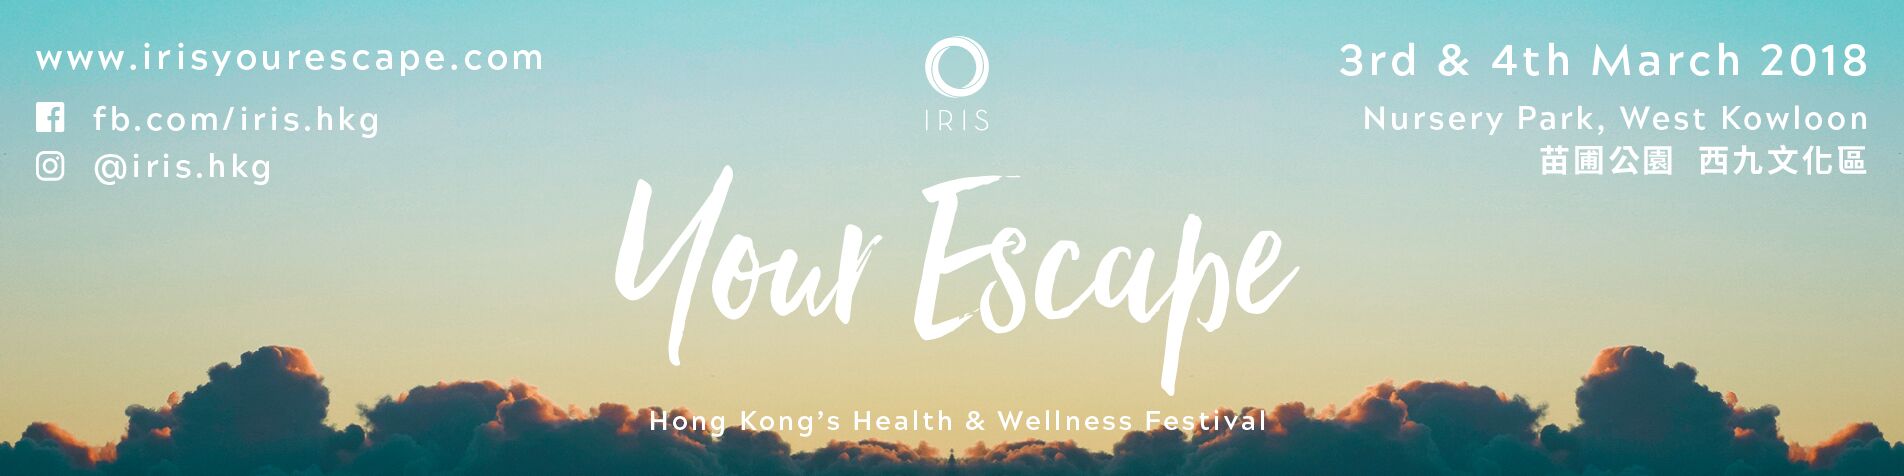 IRIS: Your Escape, Hong Kong's Health & Wellness Festival